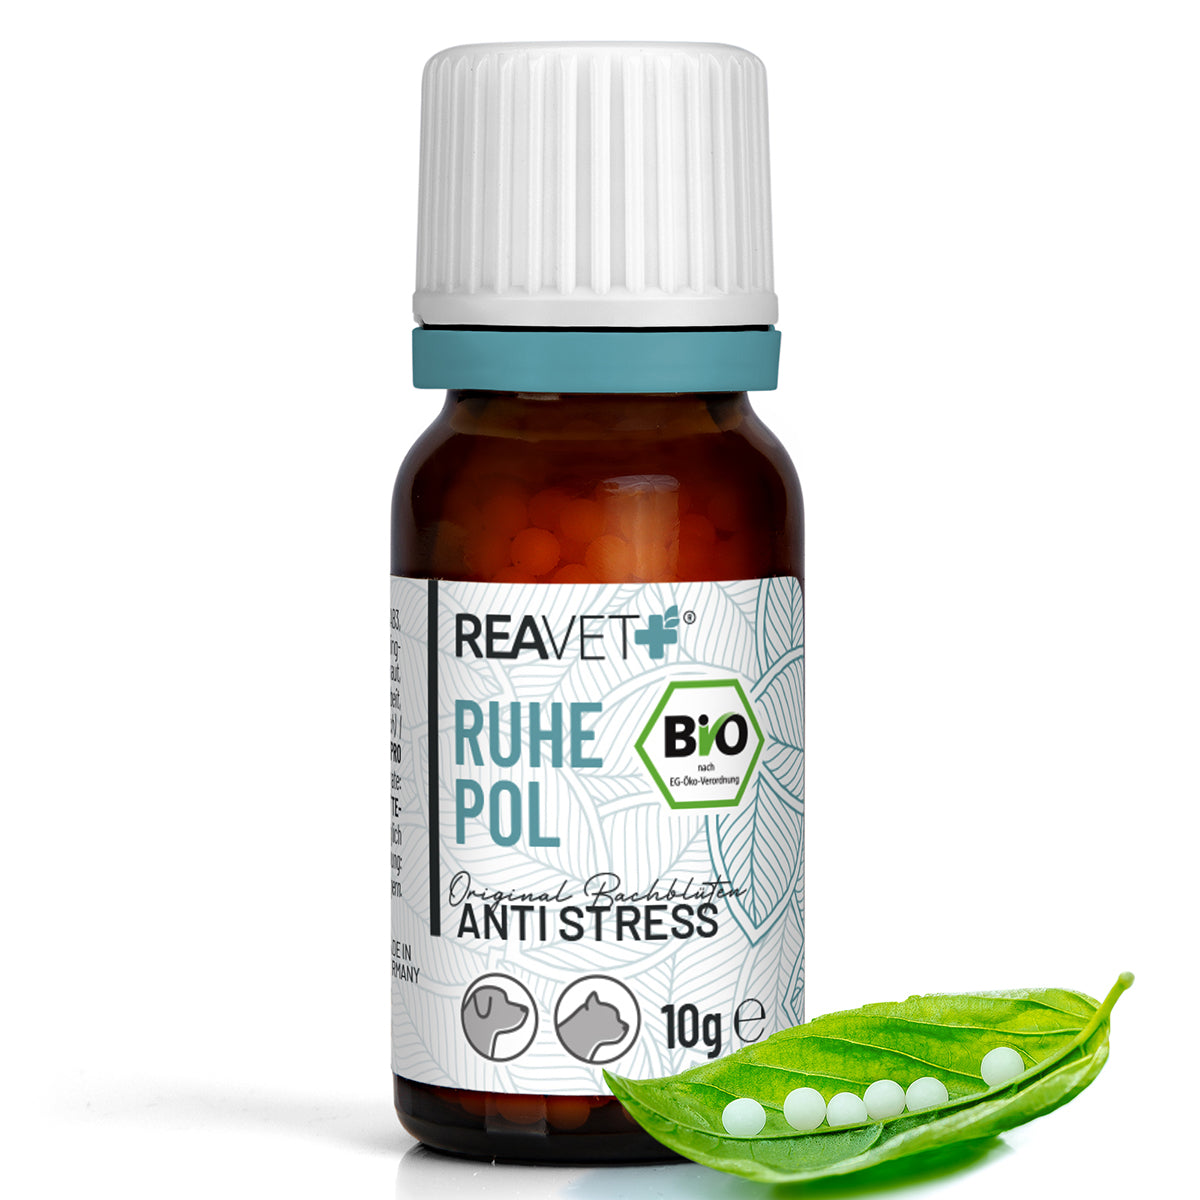 ReaVet-Bio-Bachblüten-Ruhepol